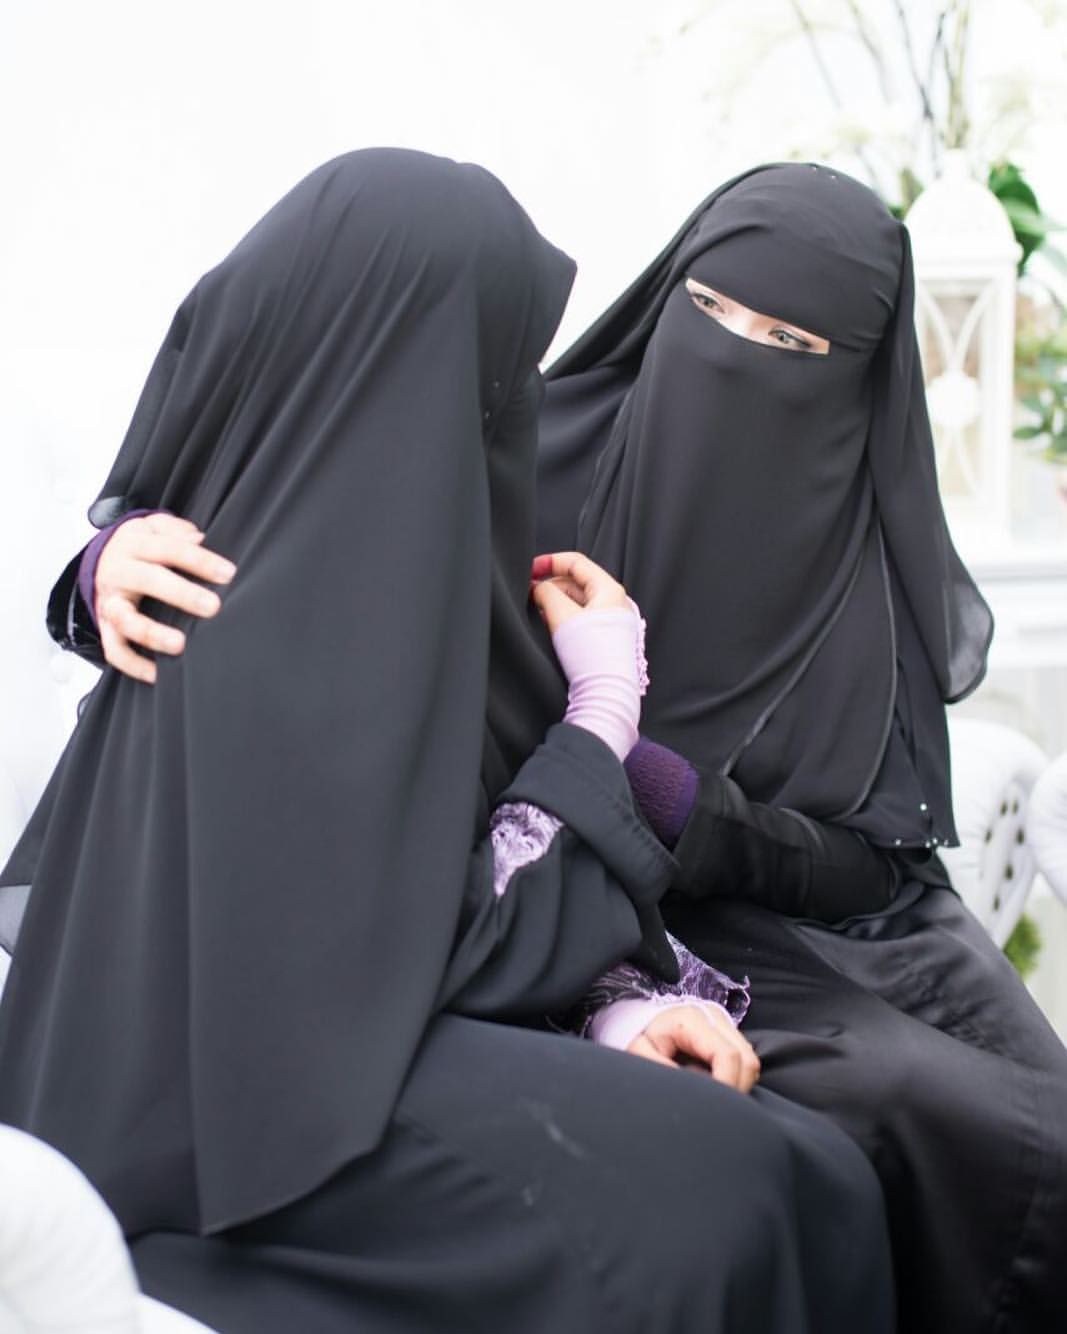 Muslimwomenfucking Xxx A - Pornography of Muslim Women Fucking (58 photos) - sex eporner pics